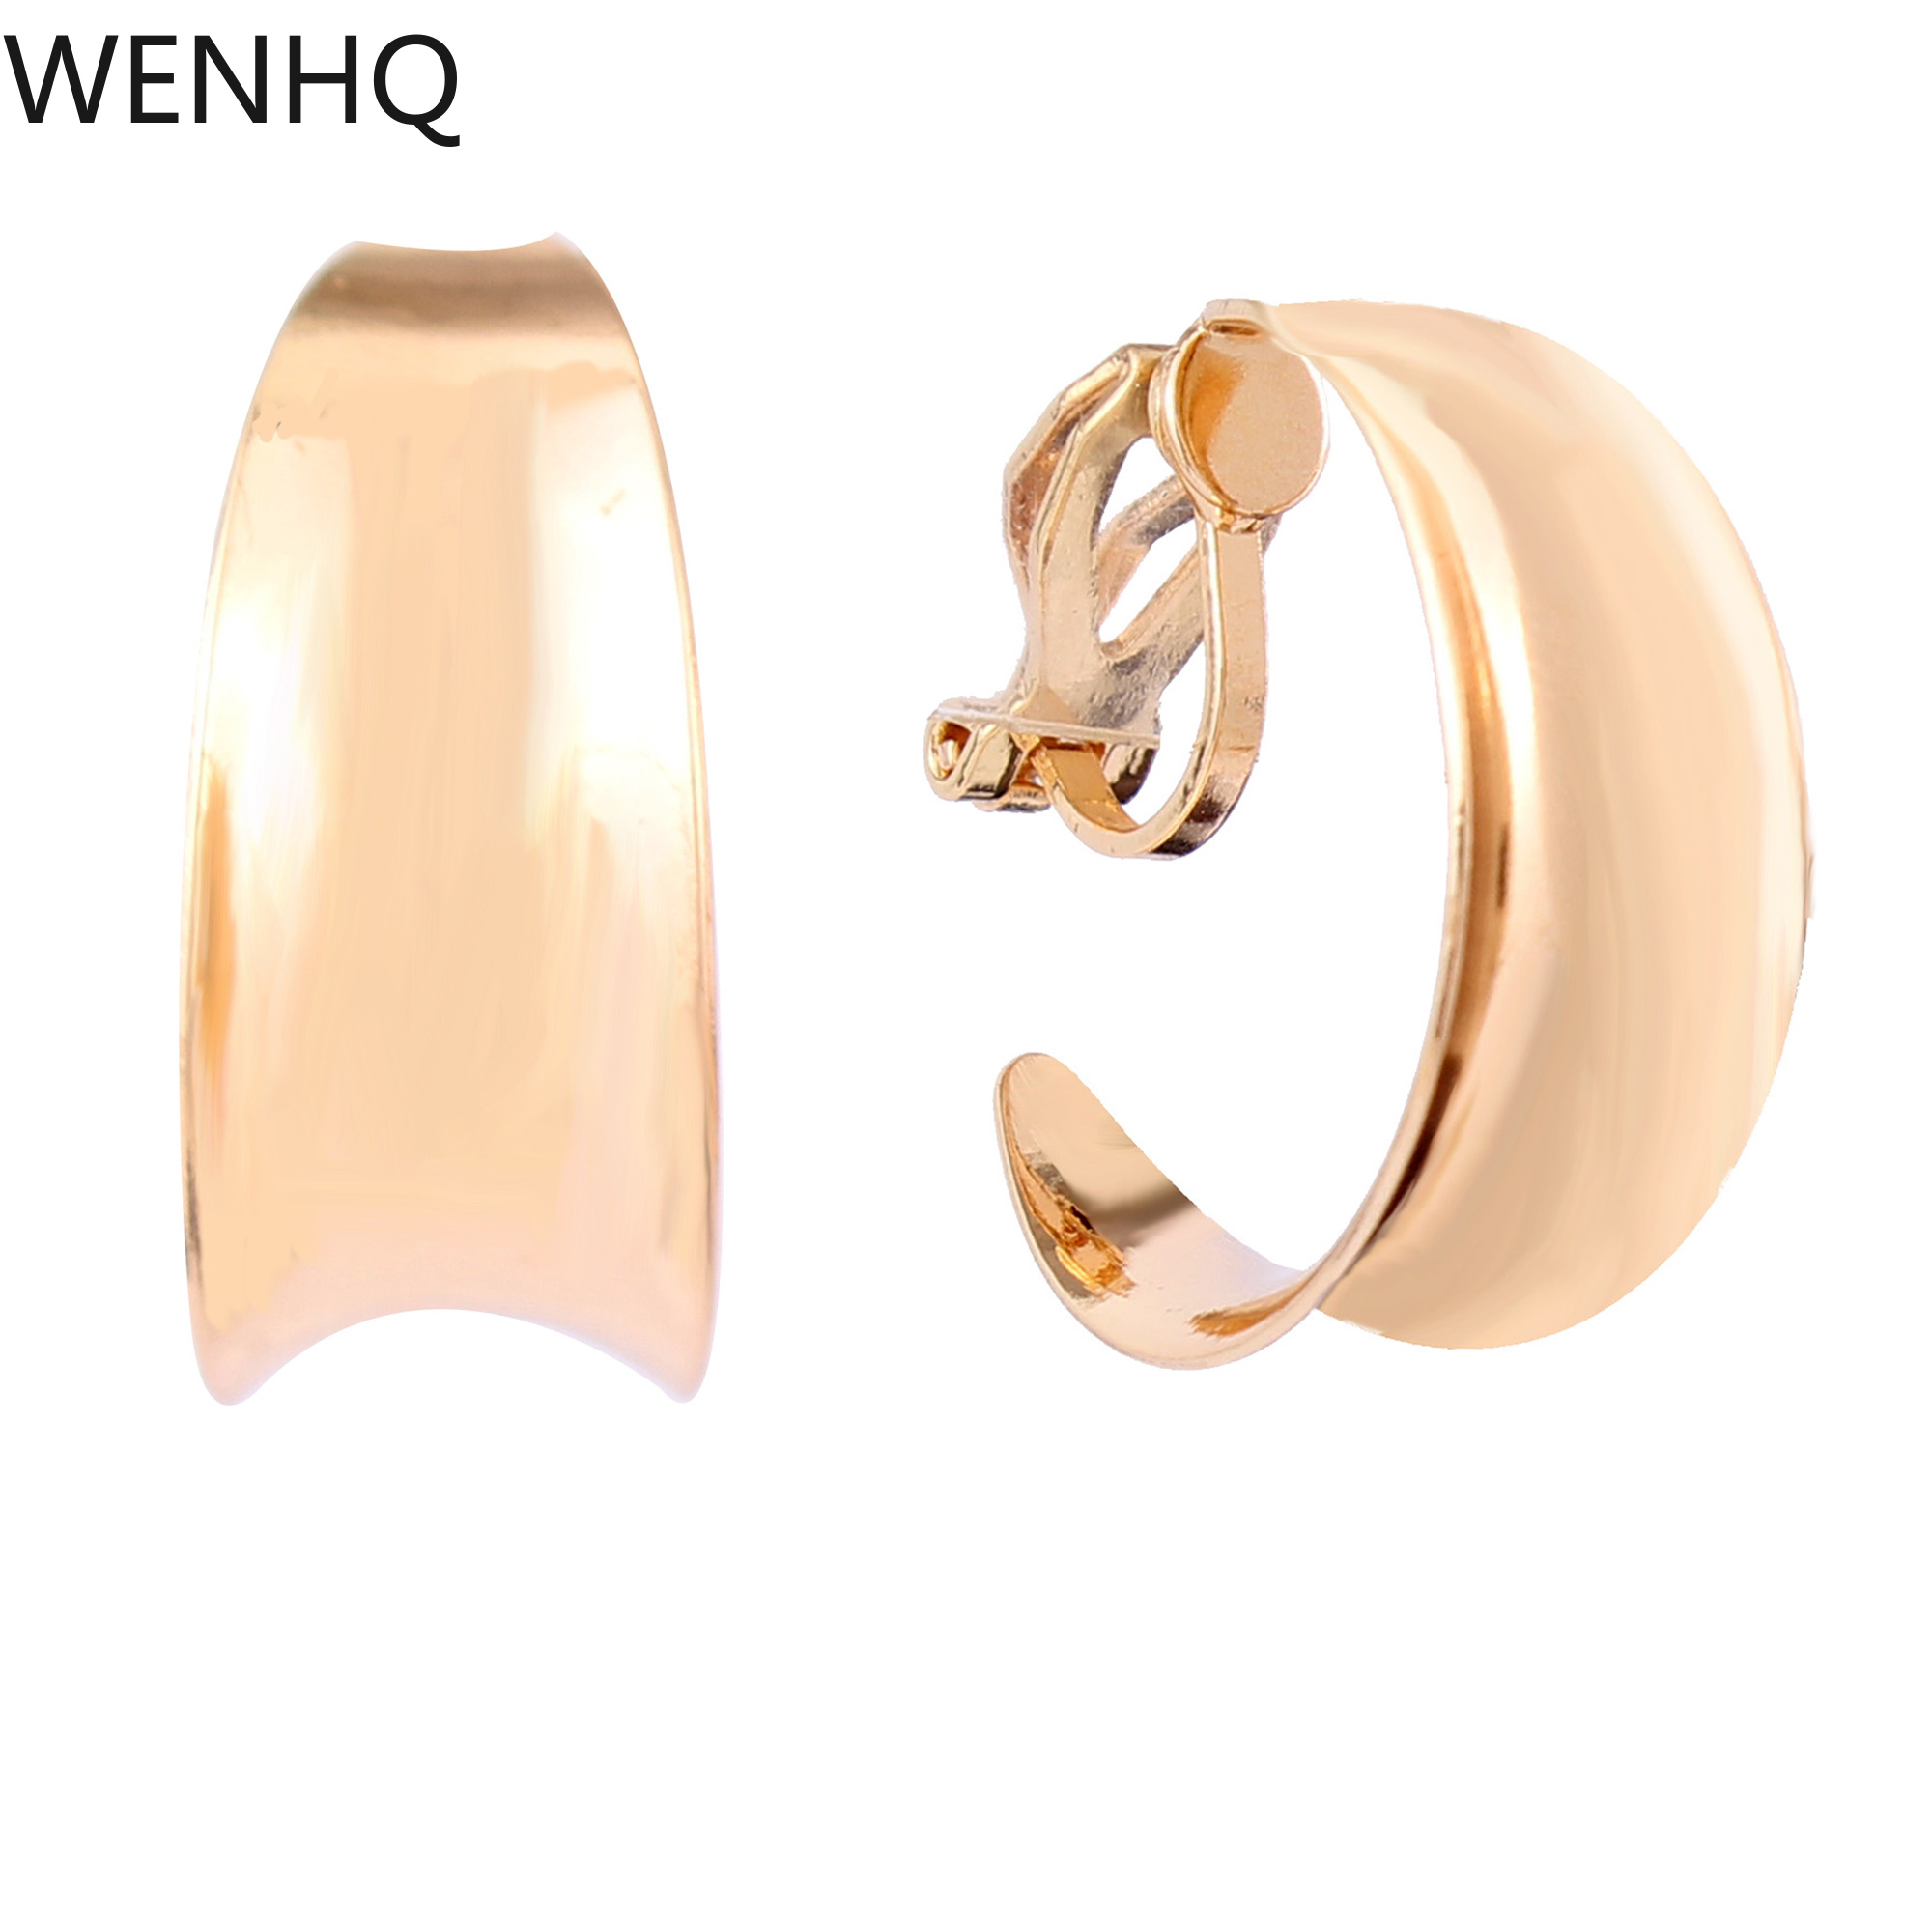 WENHQ-새로운 도착 C 모양 골드 컬러 후프 클립 귀걸이, 여성 럭셔리 패션 커프 귀걸이 귀여운 파티 생일 선물